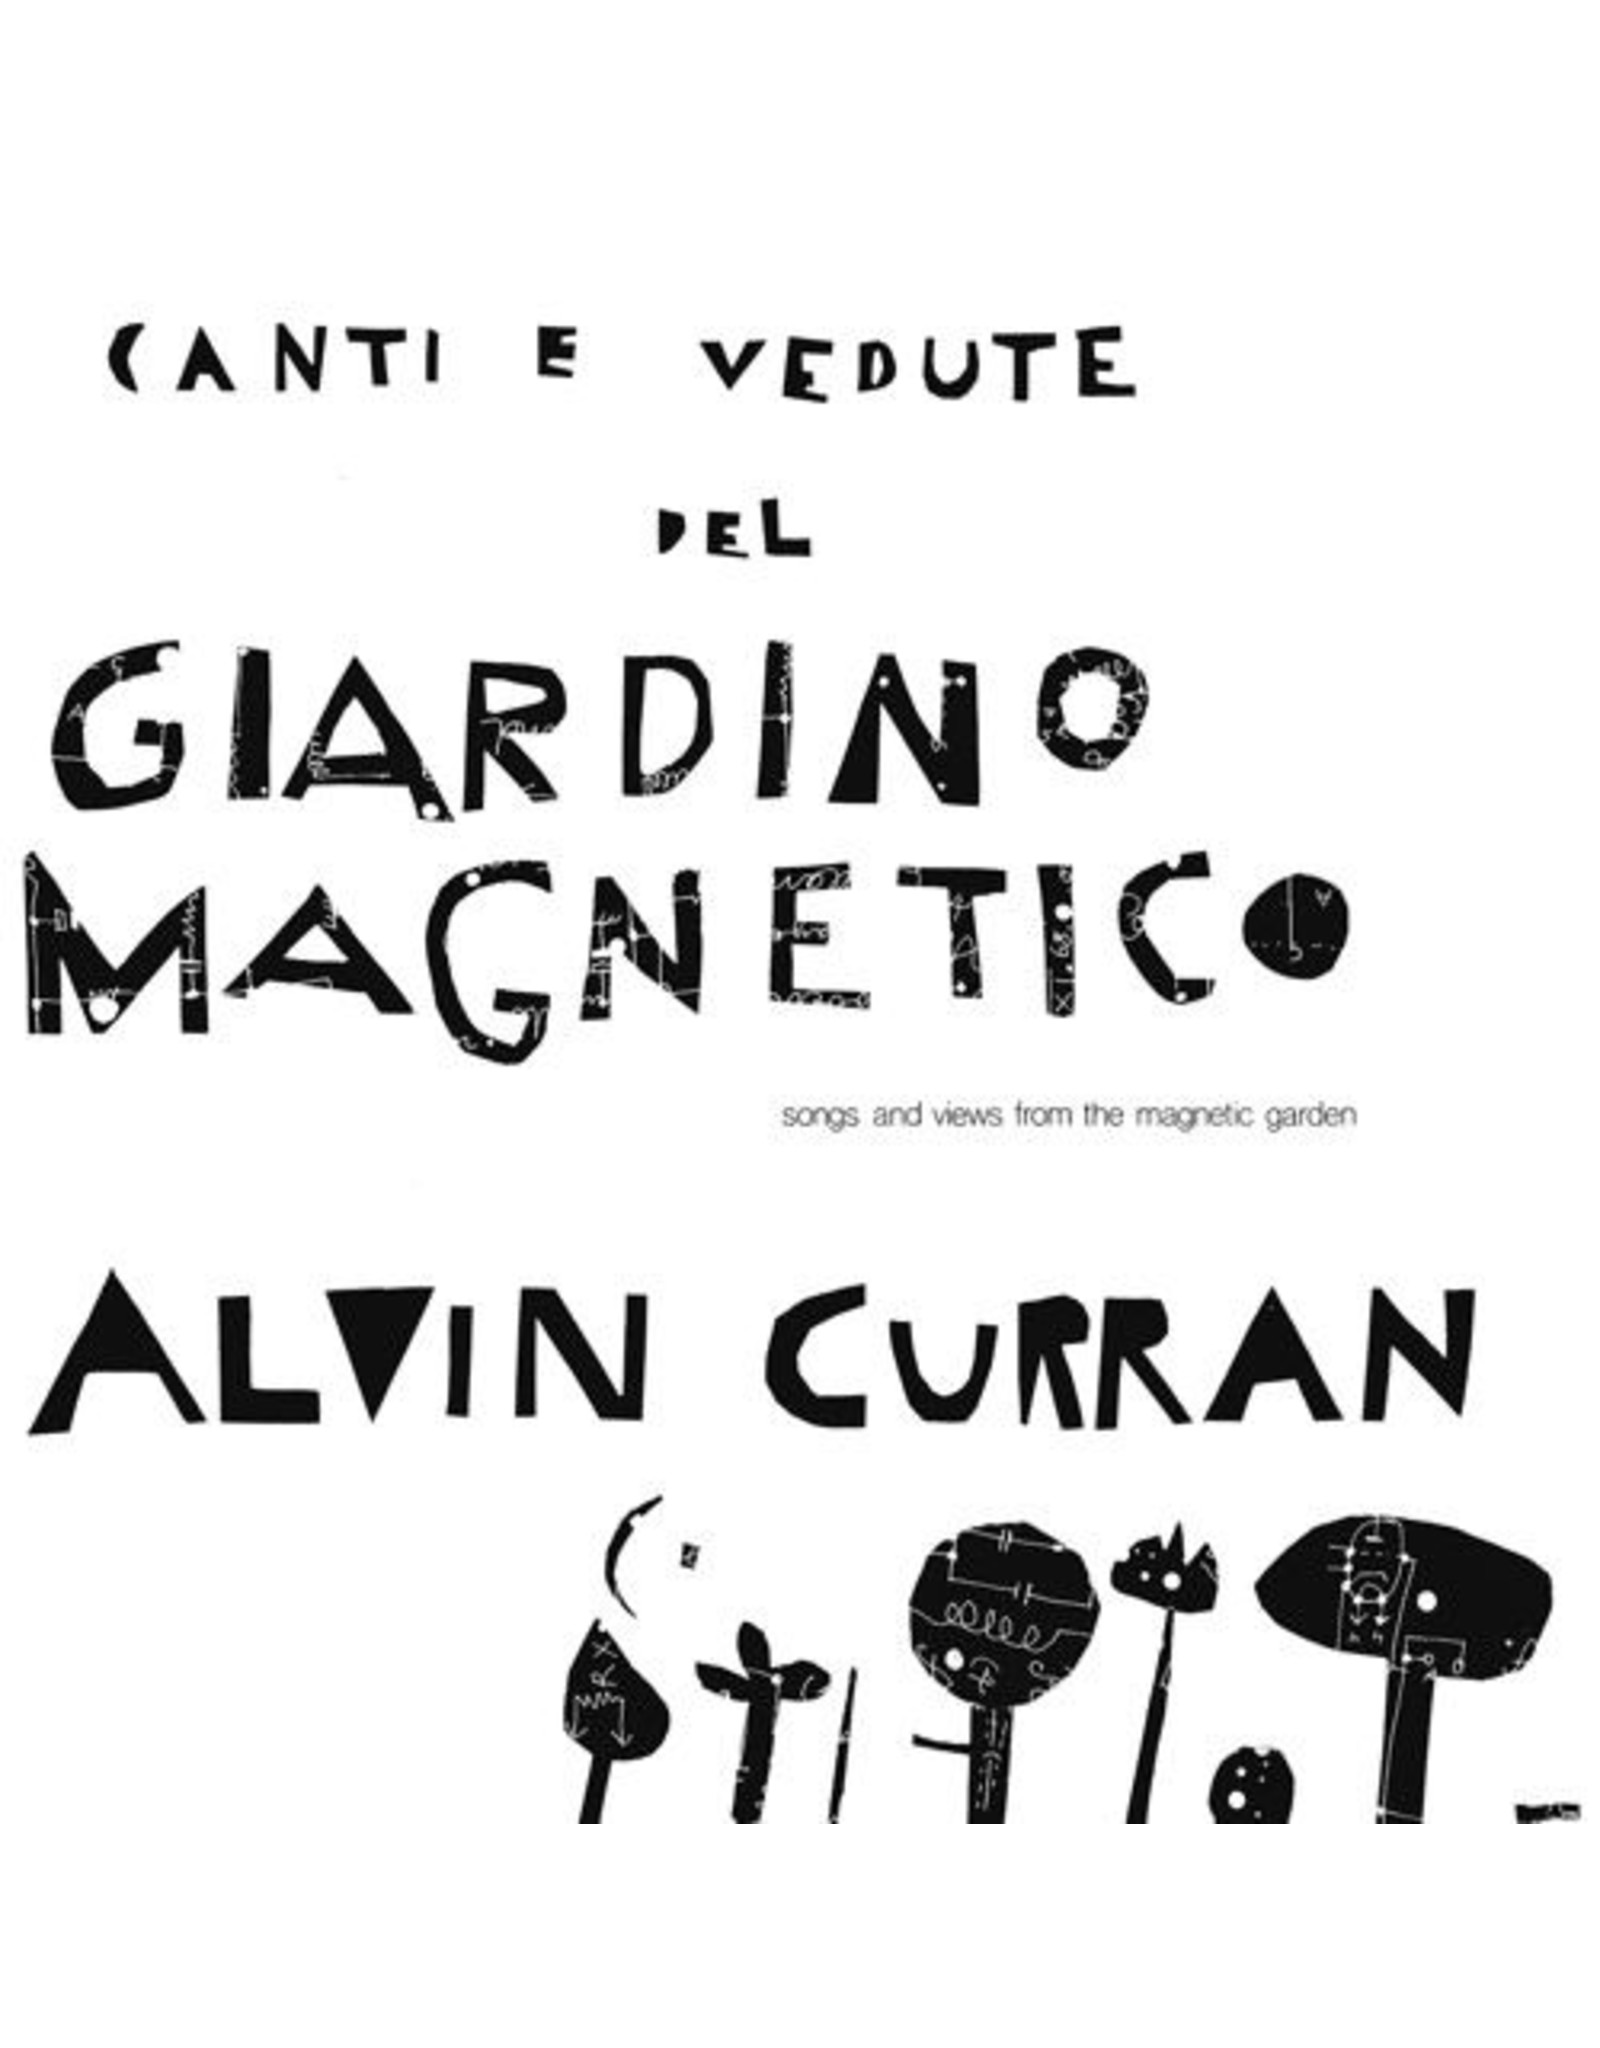 Superior Viaduct Curran, Alvin: Canti E Vedute Del LP